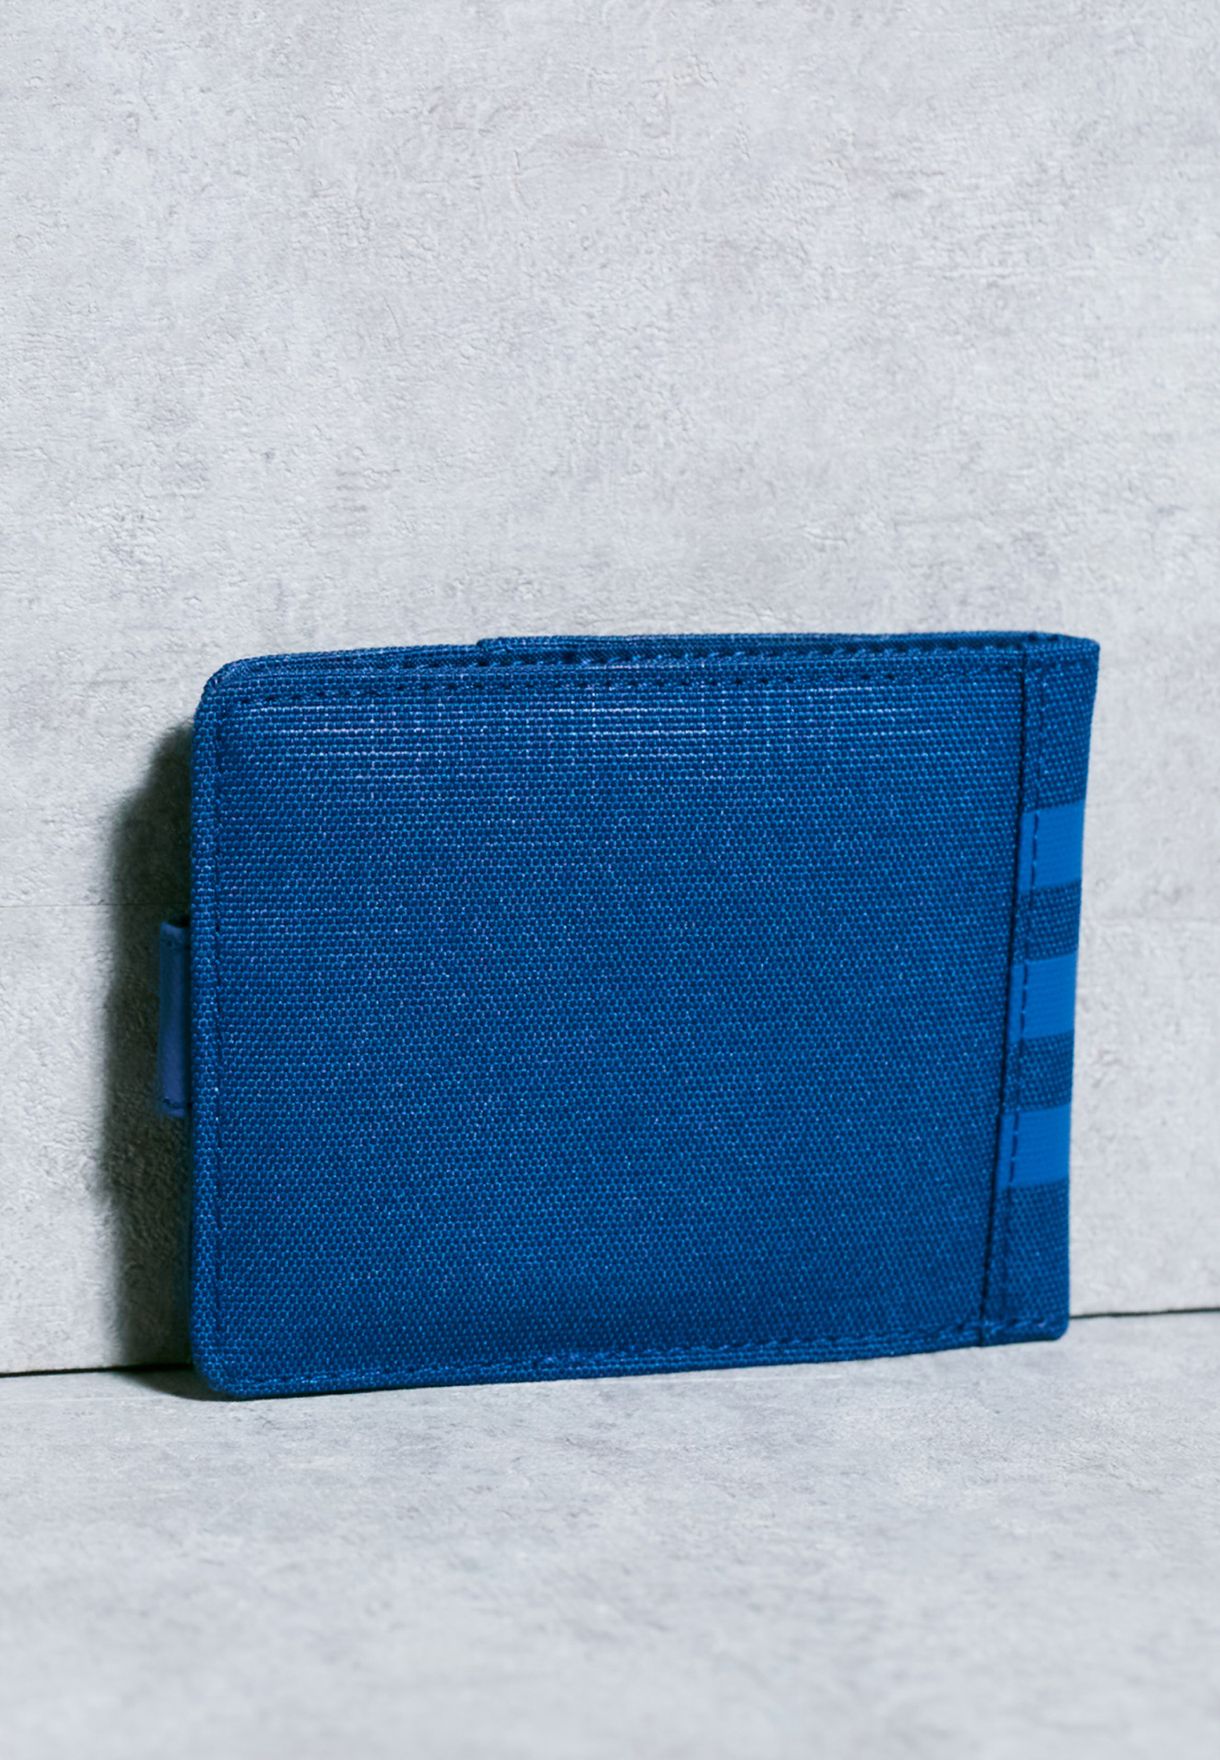 adidas 3s per wallet unisex mavi cüzdan